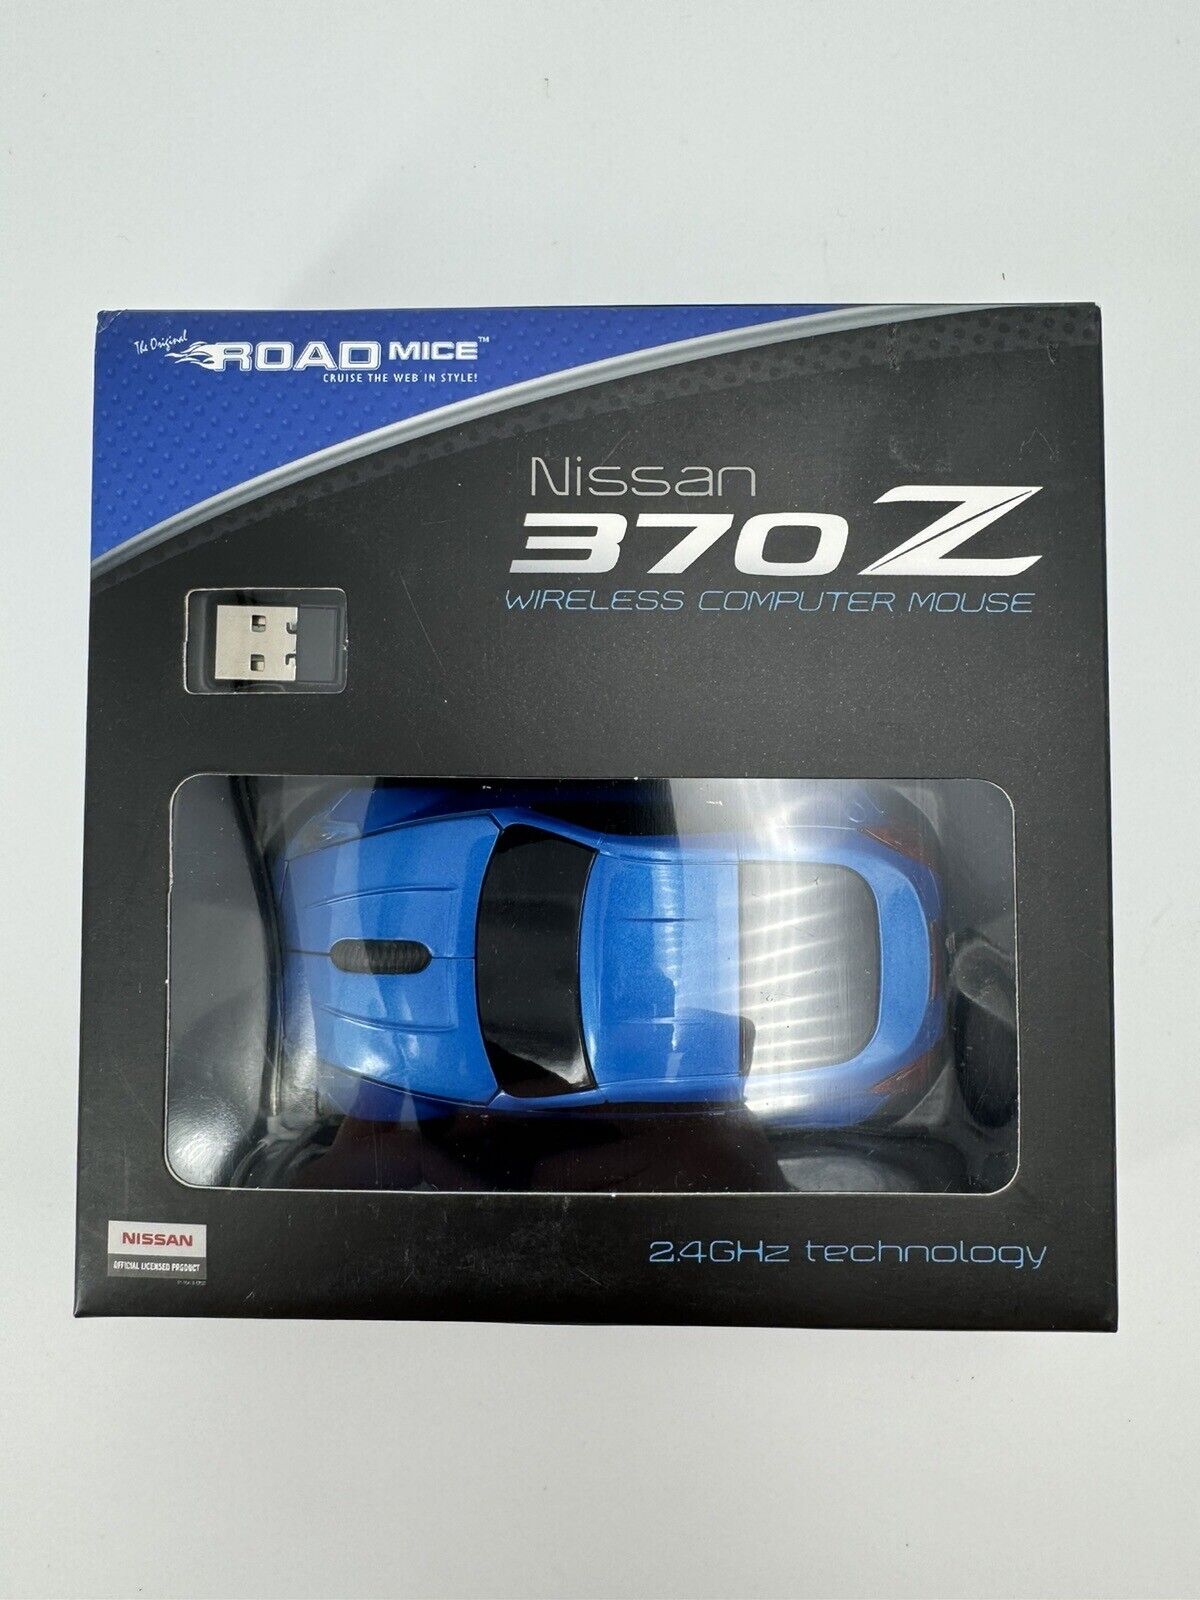 Nissan 370Z Blue Gift Original Road Mice Wireless Computer Car Mouse headlights